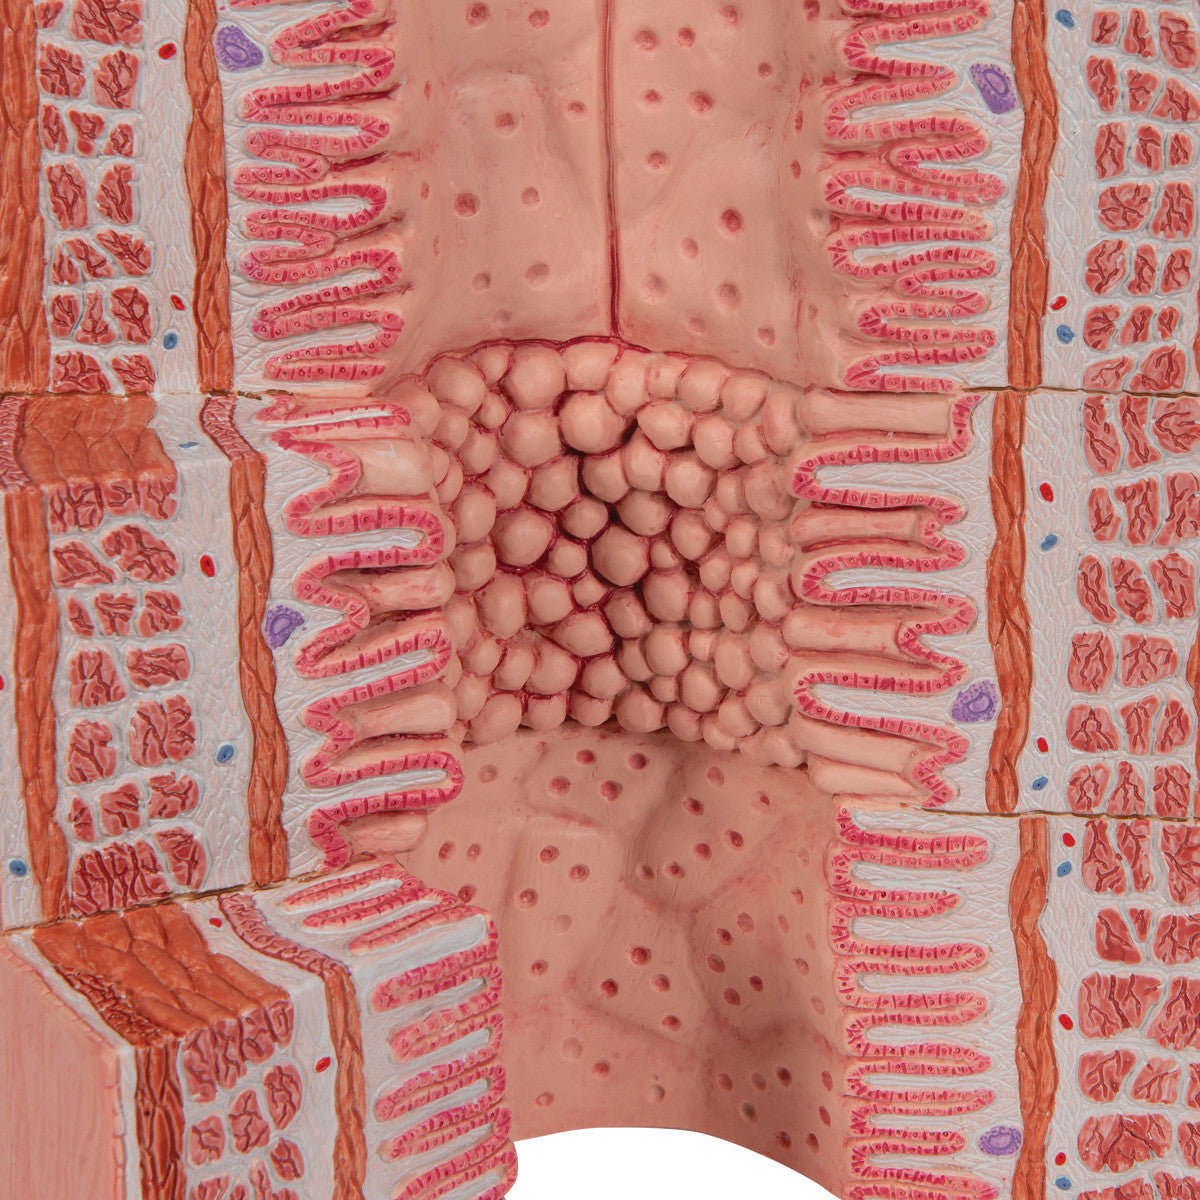 MICROanatomy Digestive System - 20 times magnified | 3B Scientific K23